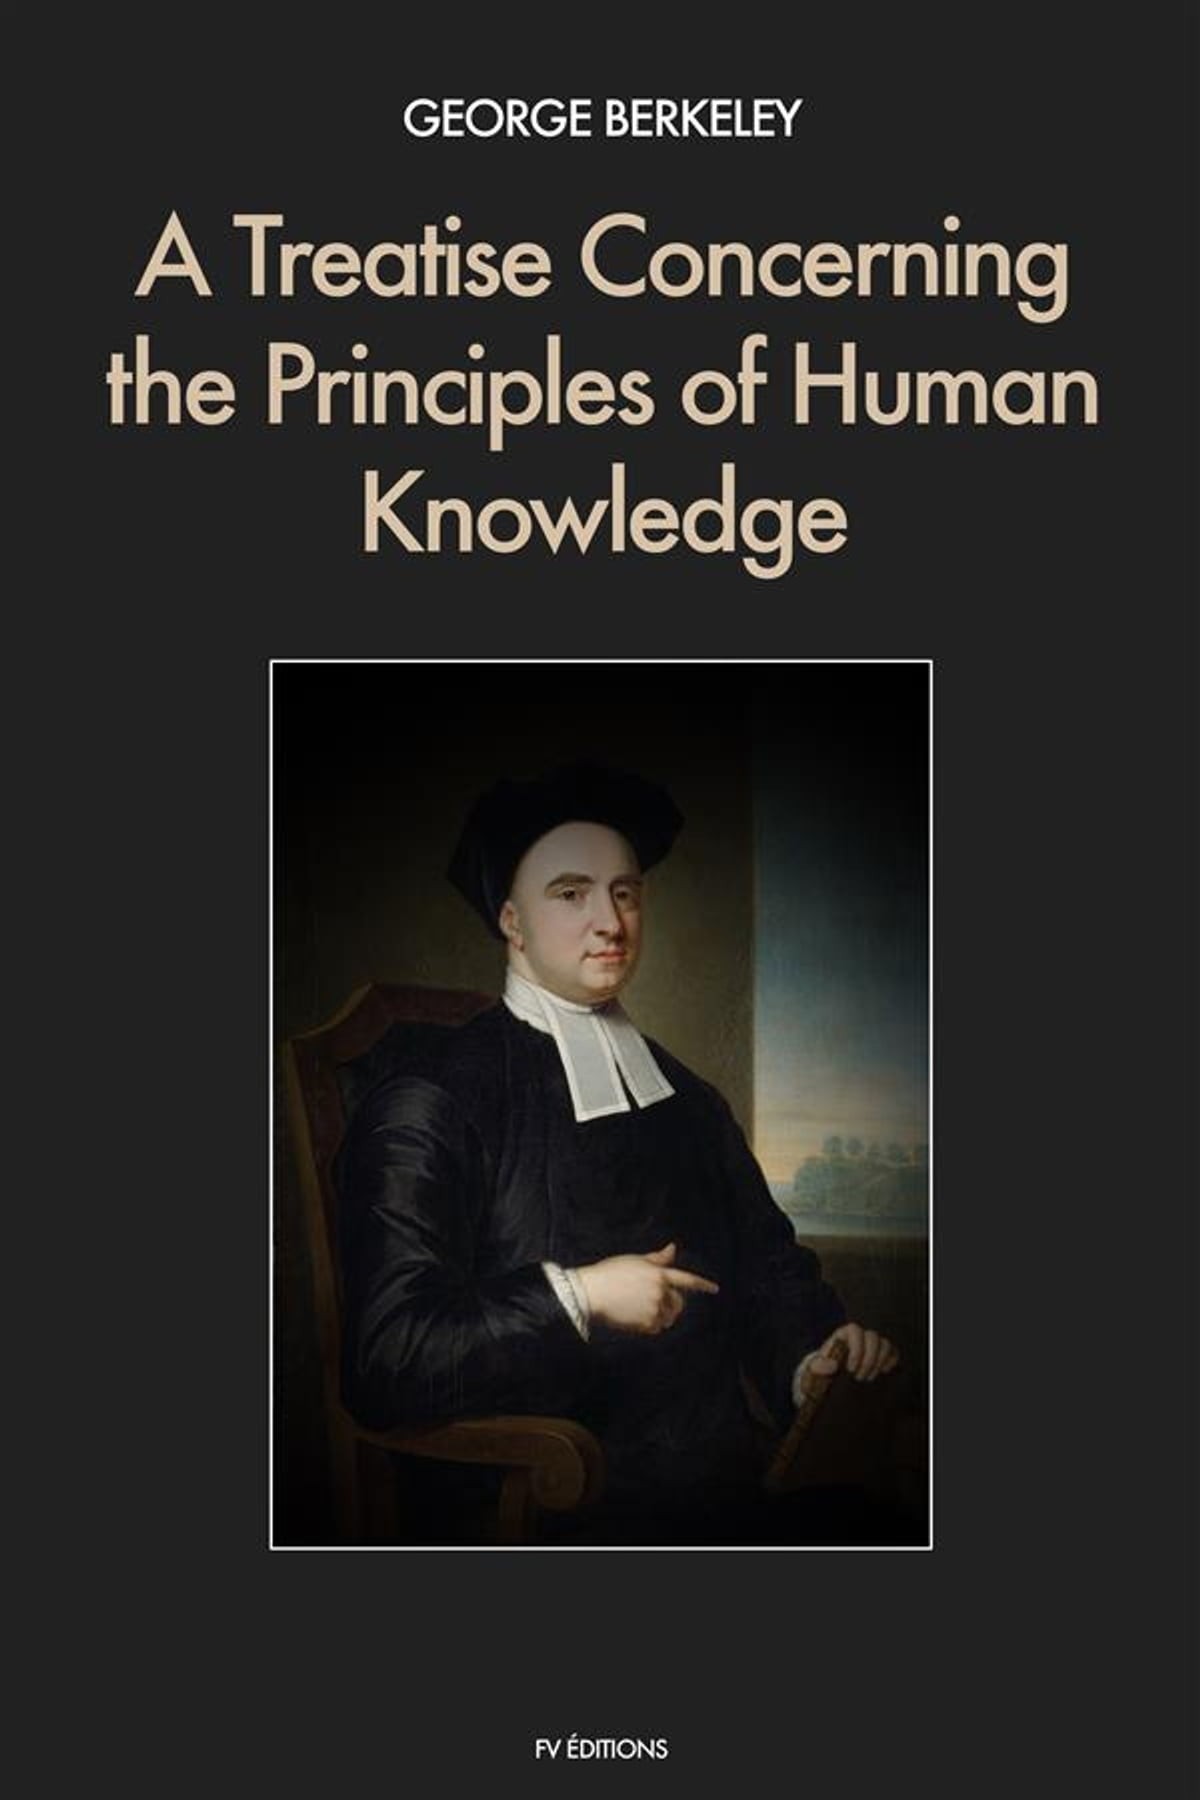 Principles of Human Knowledge